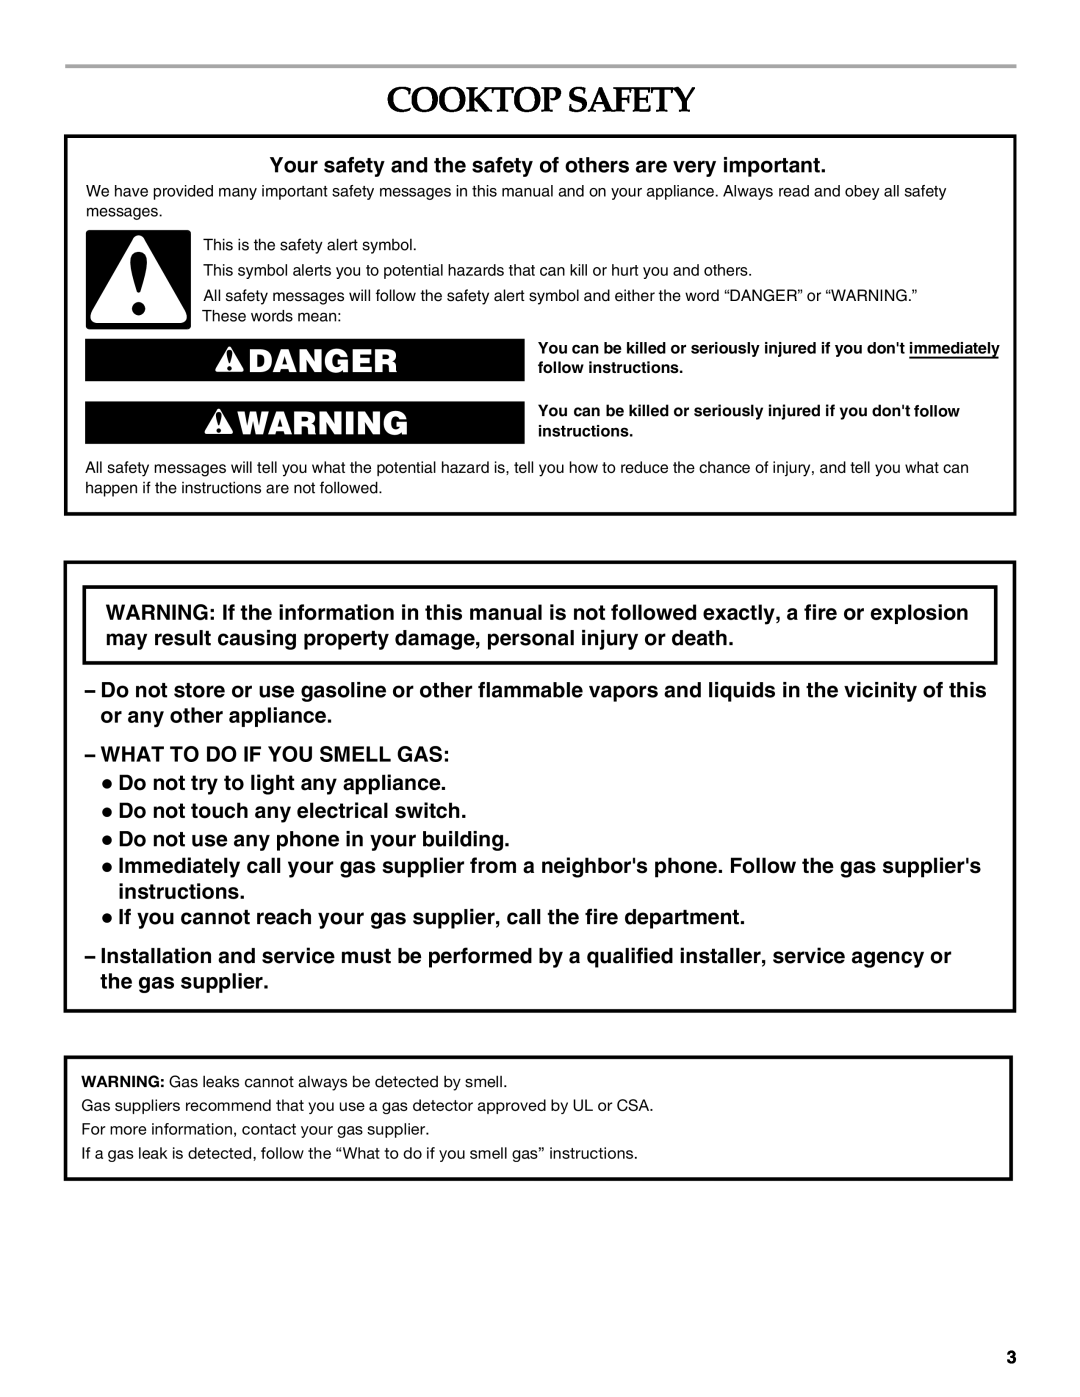 KitchenAid KGCV566 manual Cooktop Safety, Danger 